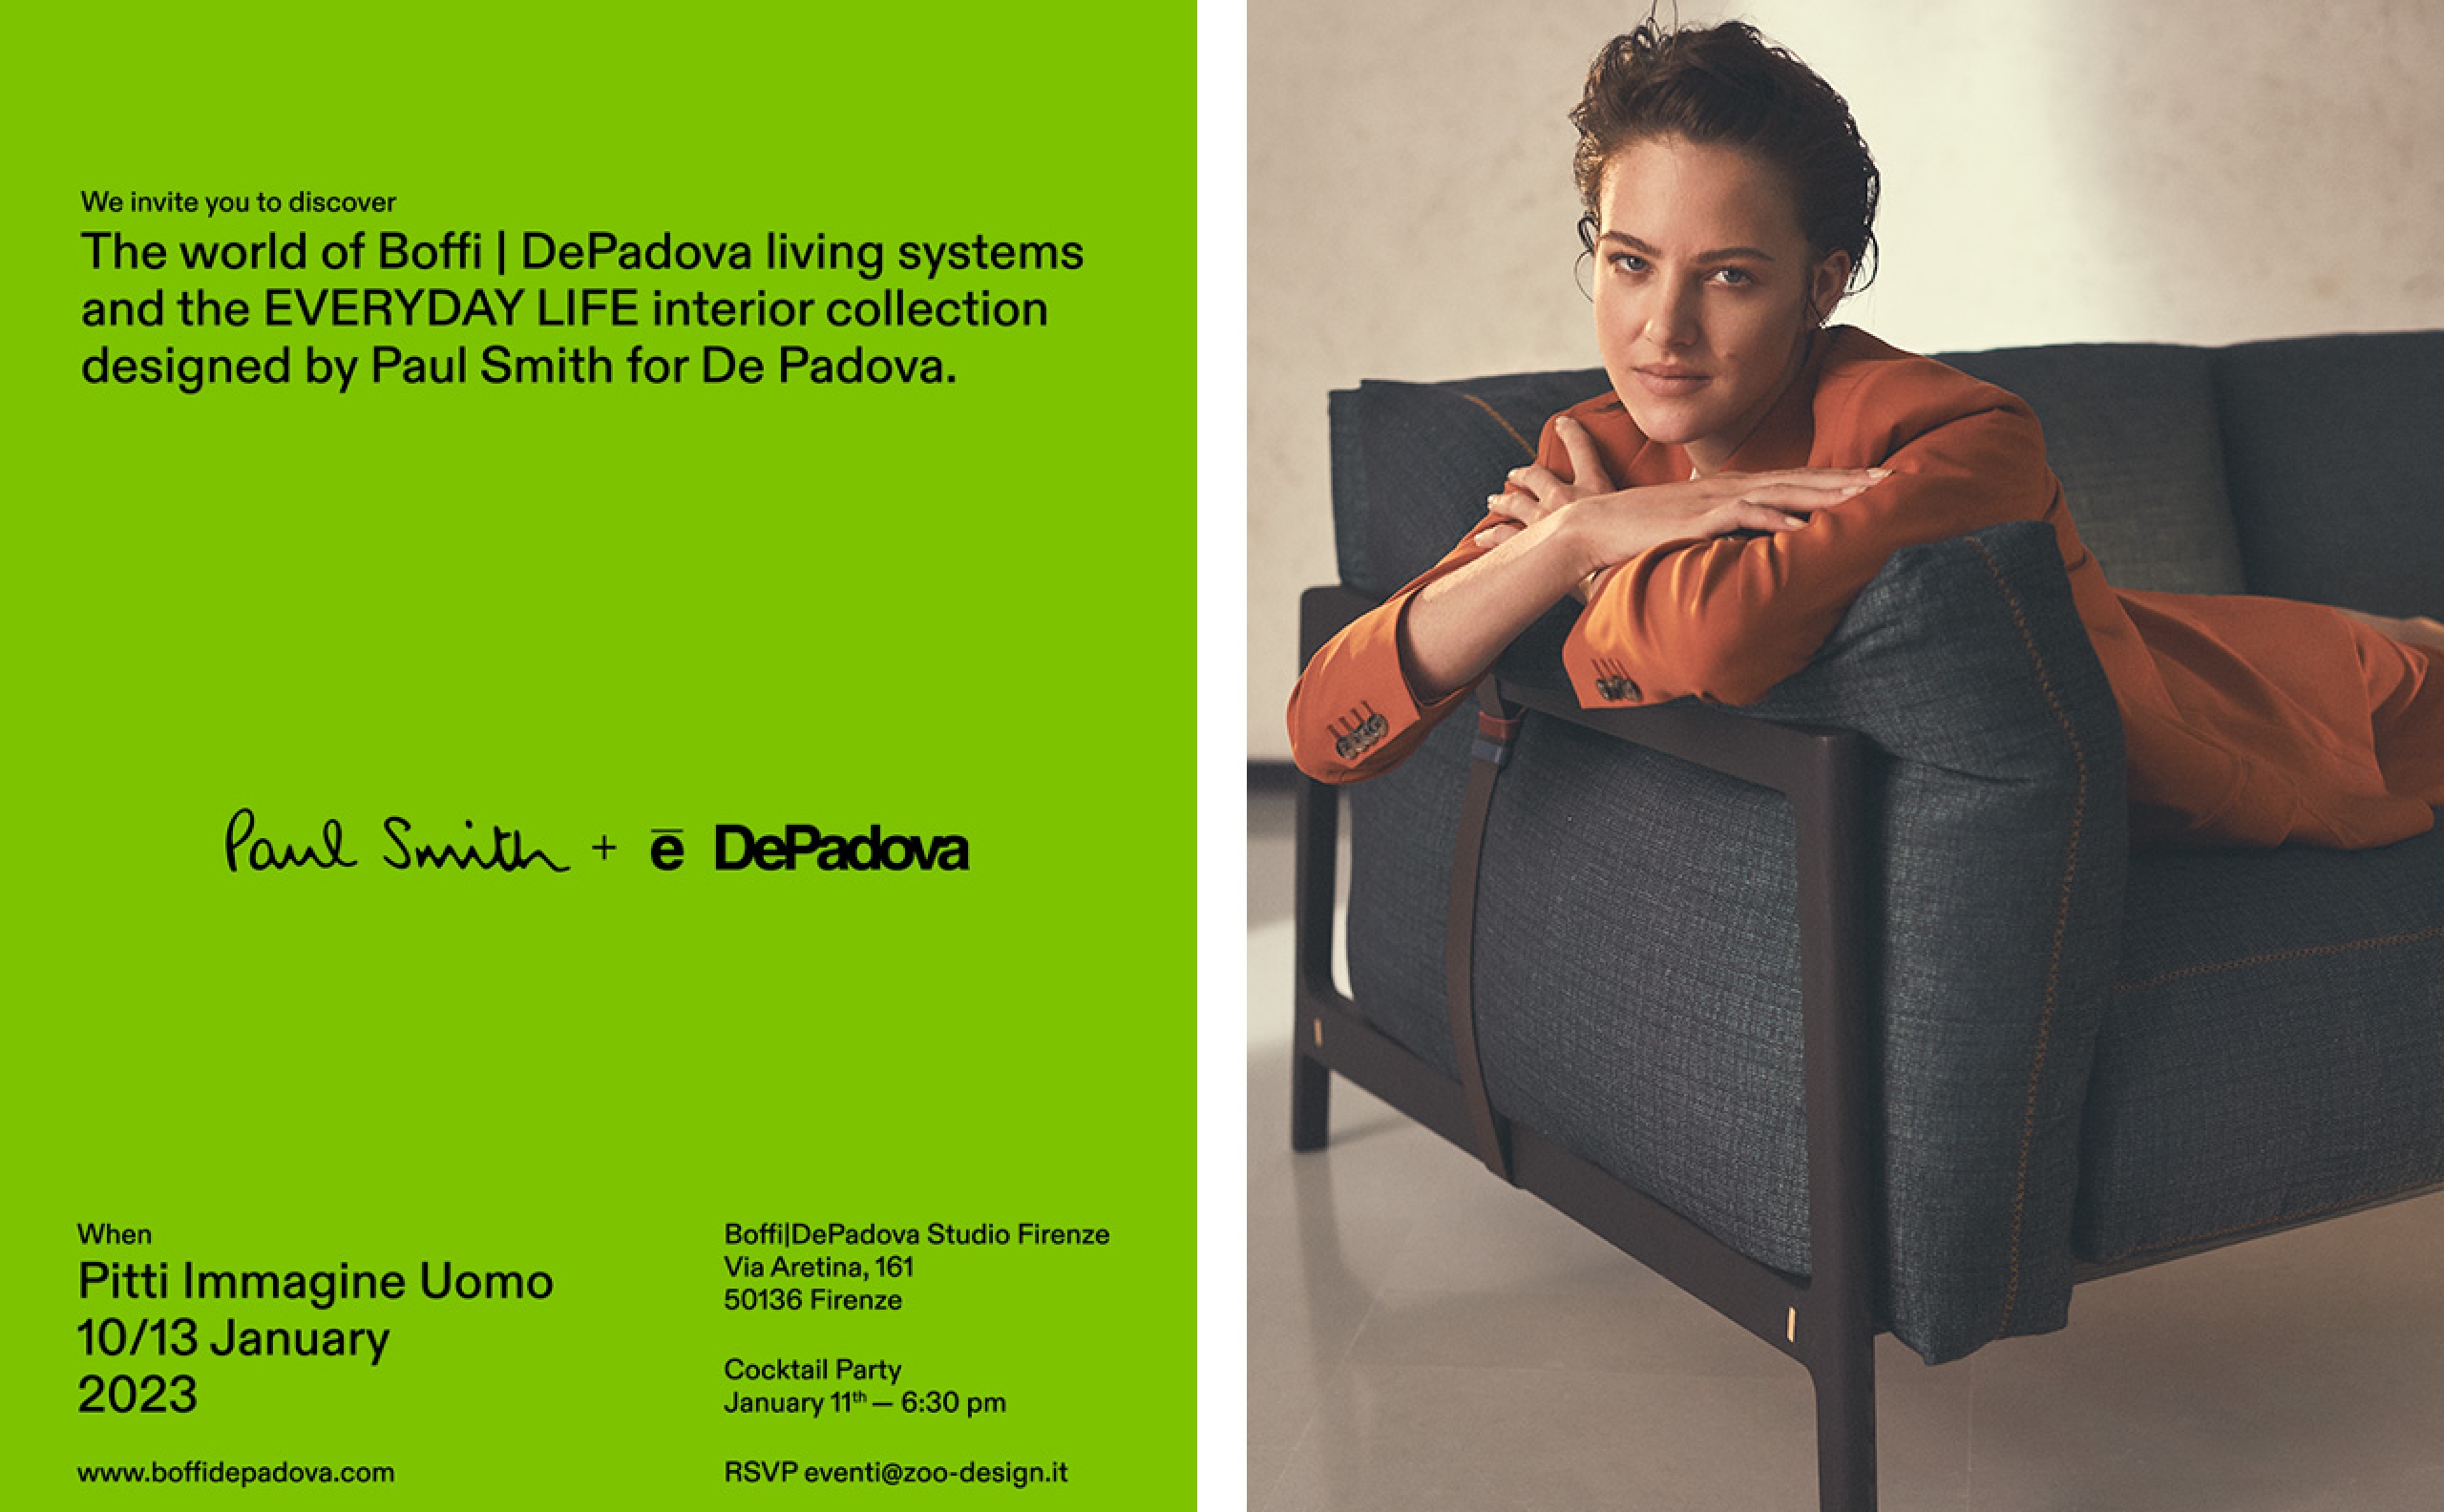 Boffi DePadova News: La collezione EVERYDAY LIFE on display da Boffi|DePadova Studio Firenze 1